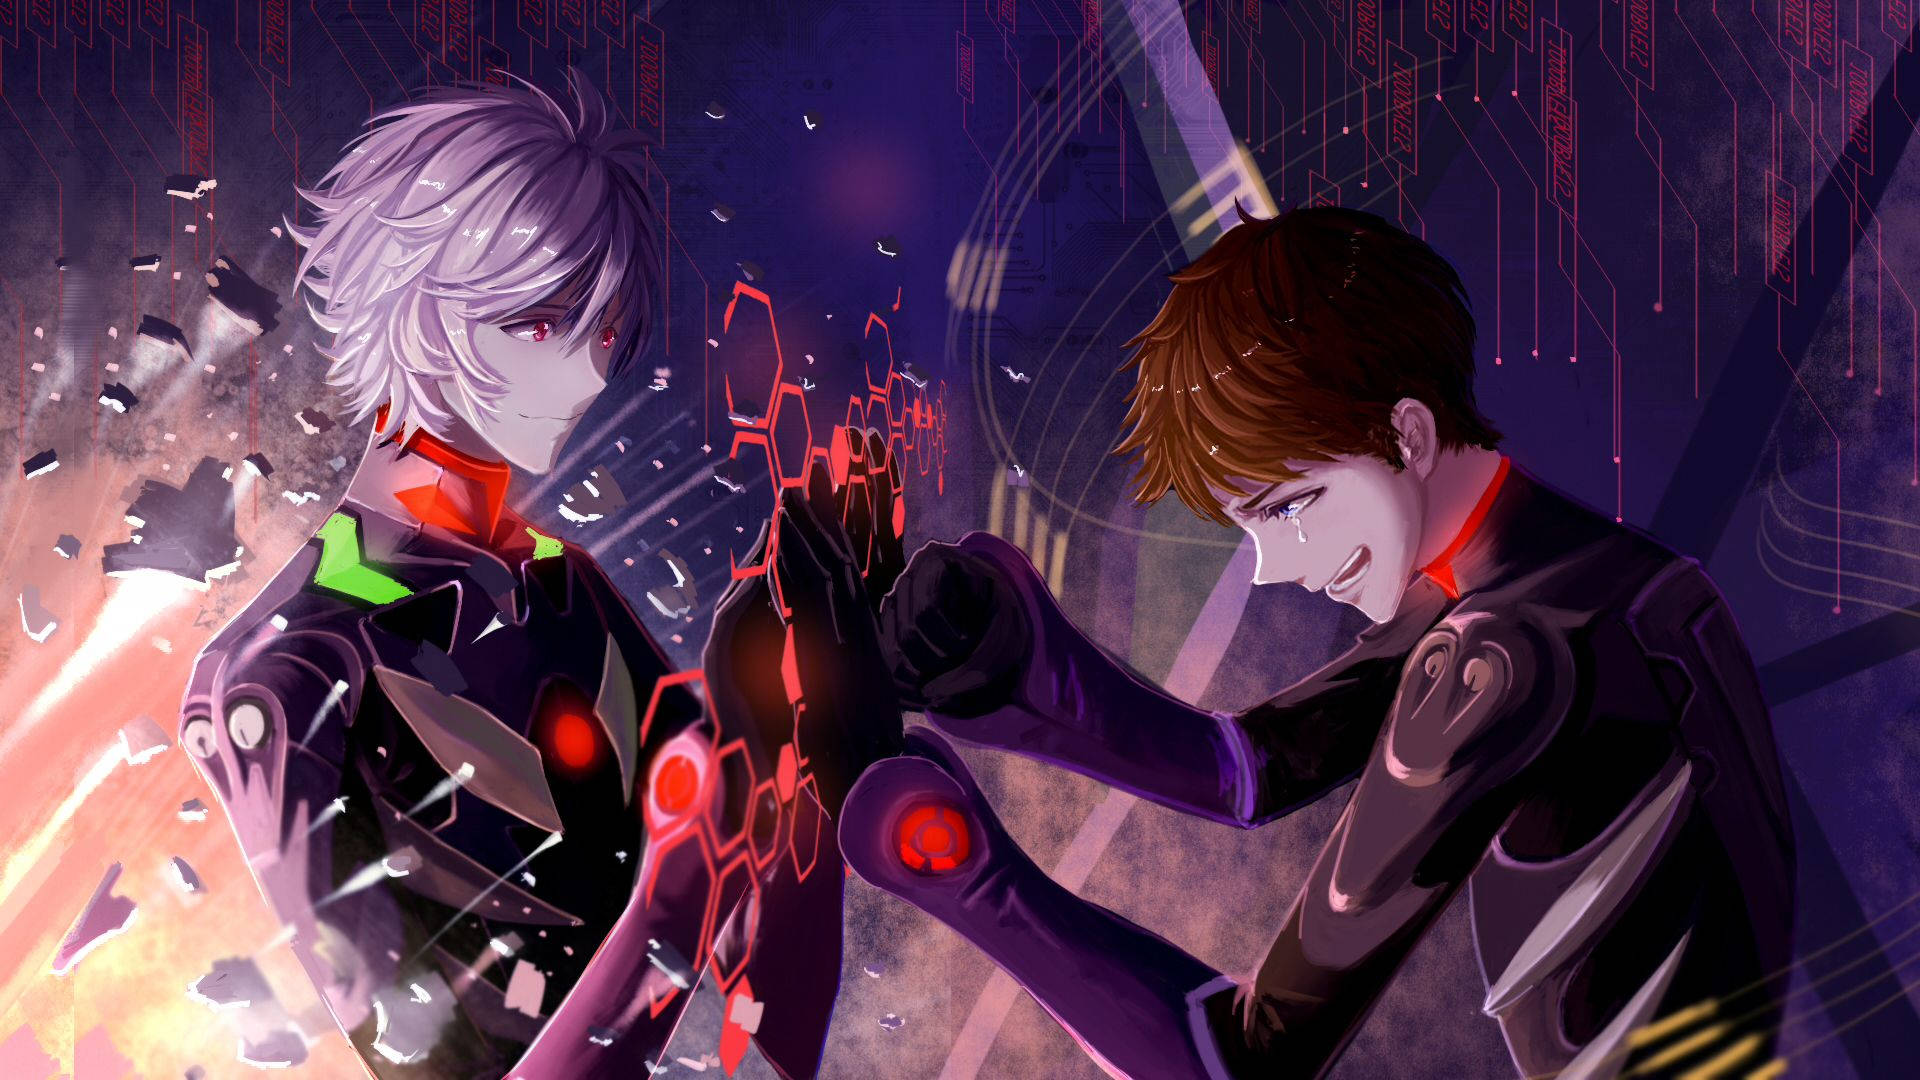 "Kaworu and Shinji Connecting on a Soul Level" Wallpaper